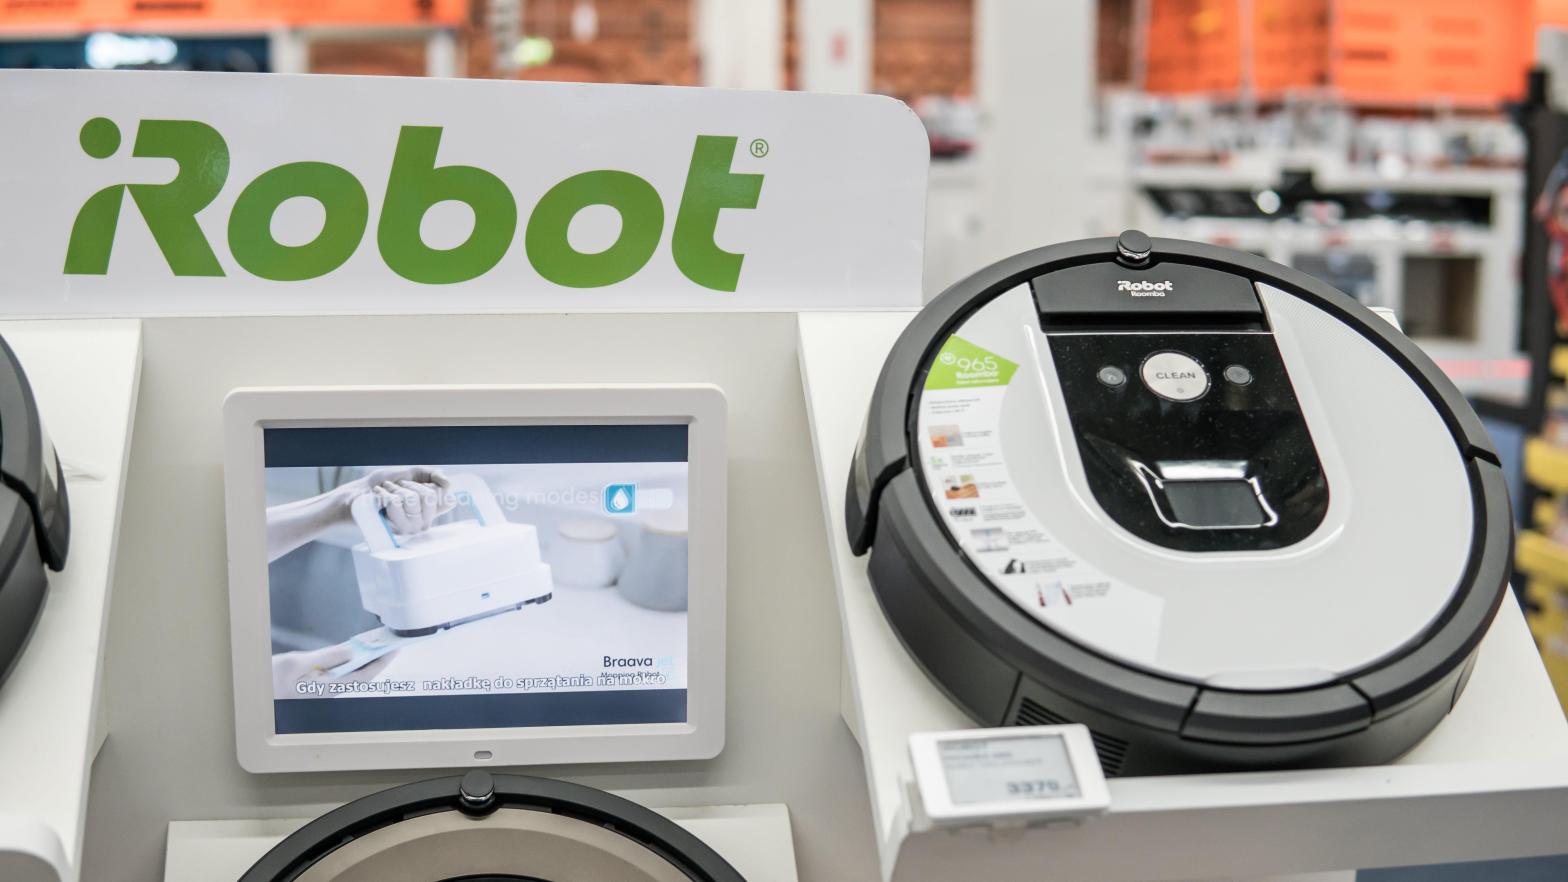 iRobot is known for their autonomous vaccum and mop robots. (Image: Grzegorz Czapski, Shutterstock)